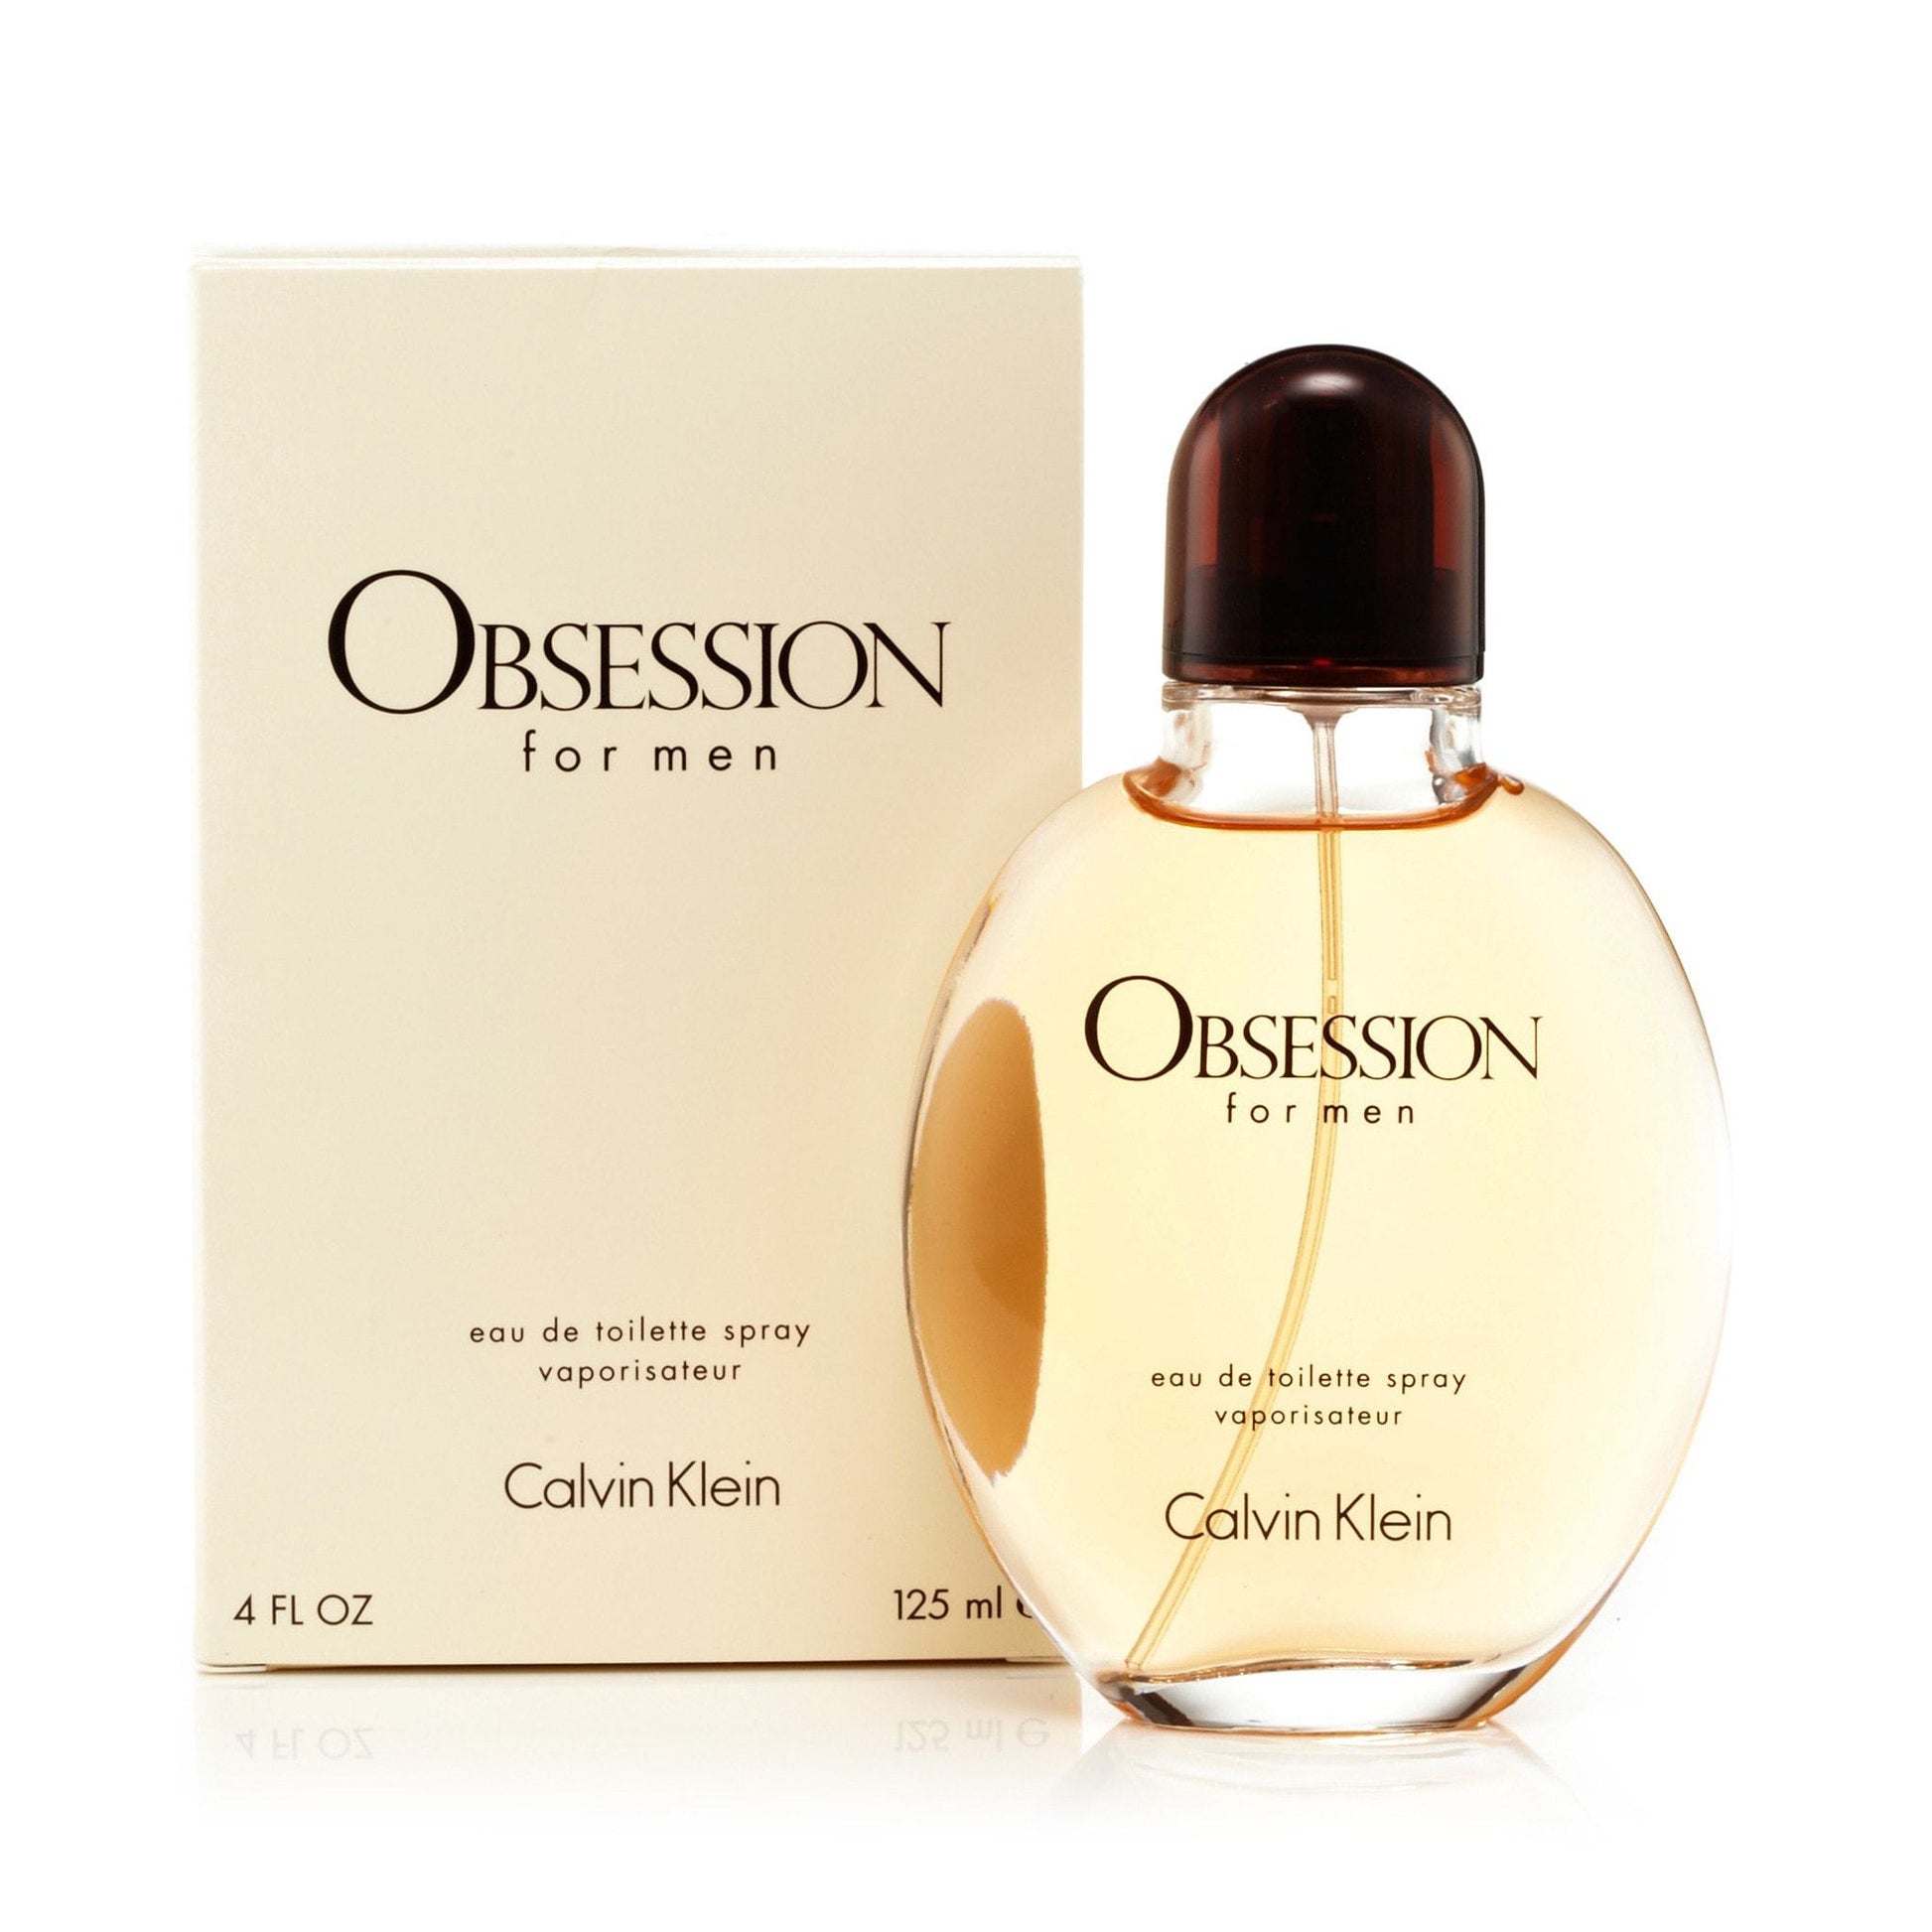 Obsession Eau de Toilette Spray for Men by Calvin Klein, Product image 1